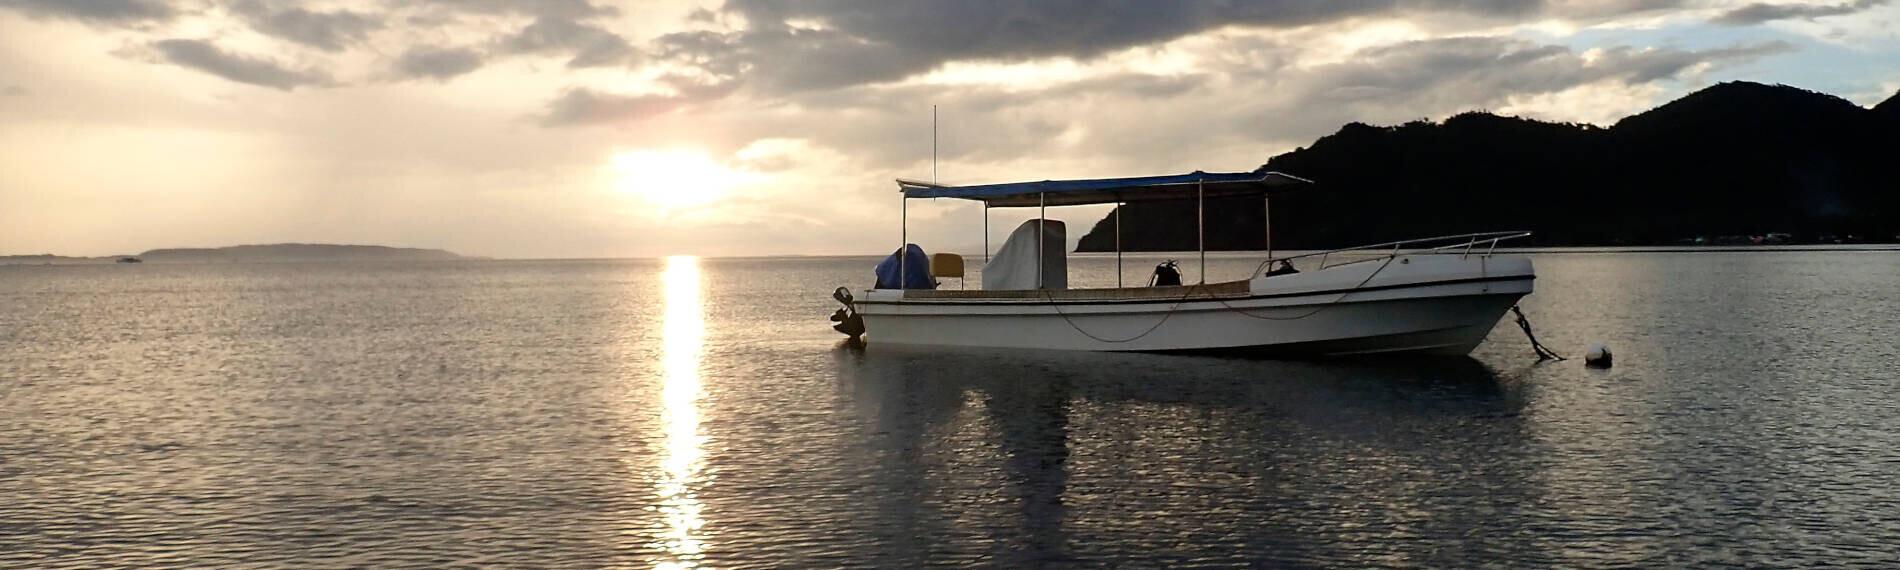 Philippinen - Leyte - Pintuyan Dive Resort, Header